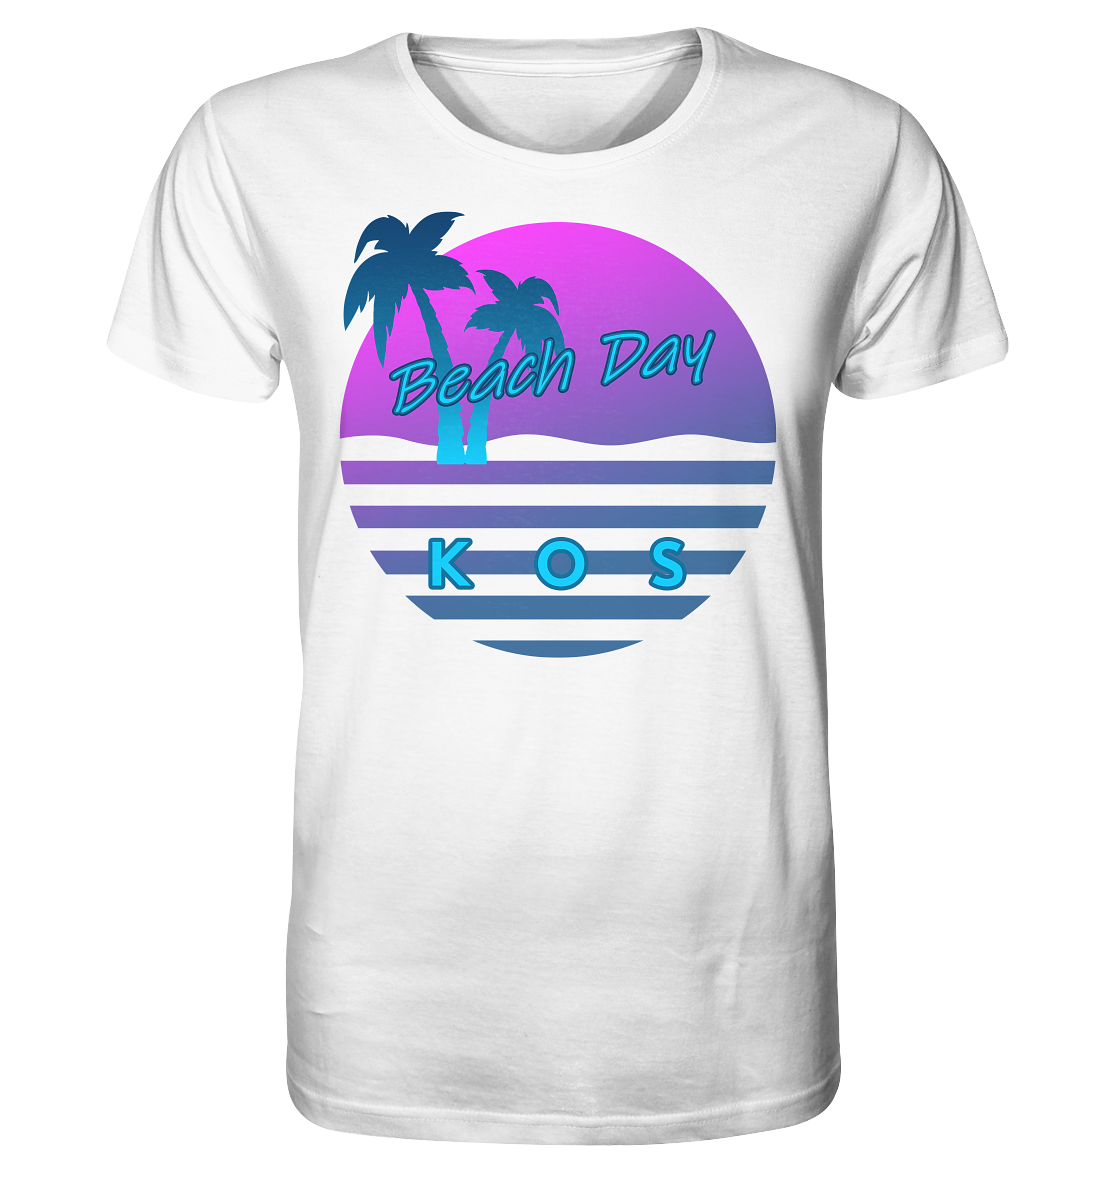 Beach Day Kos - Organic Shirt